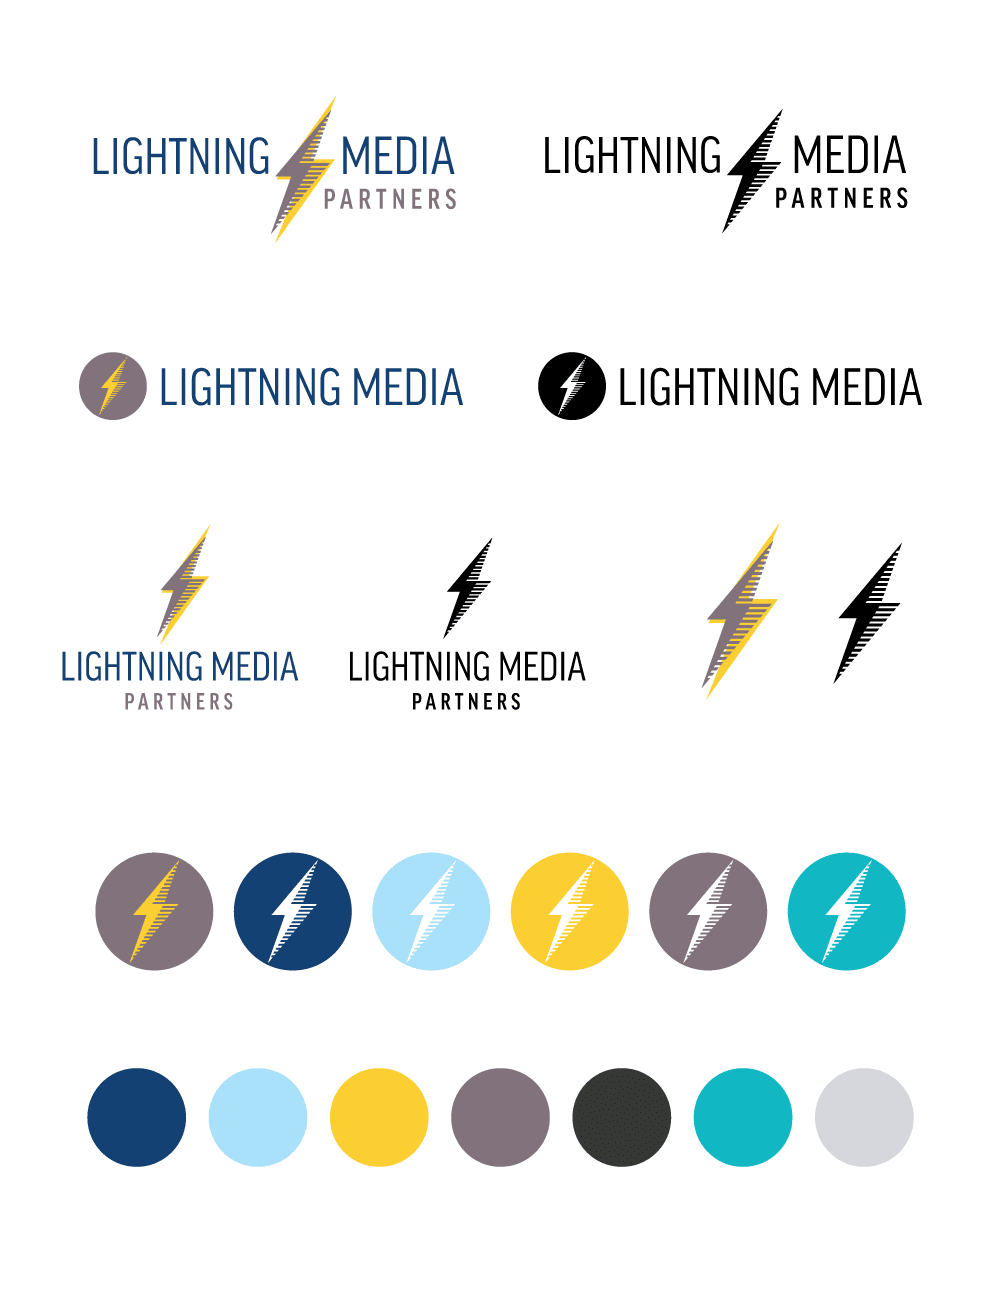 Lightning Media Partners logo suite